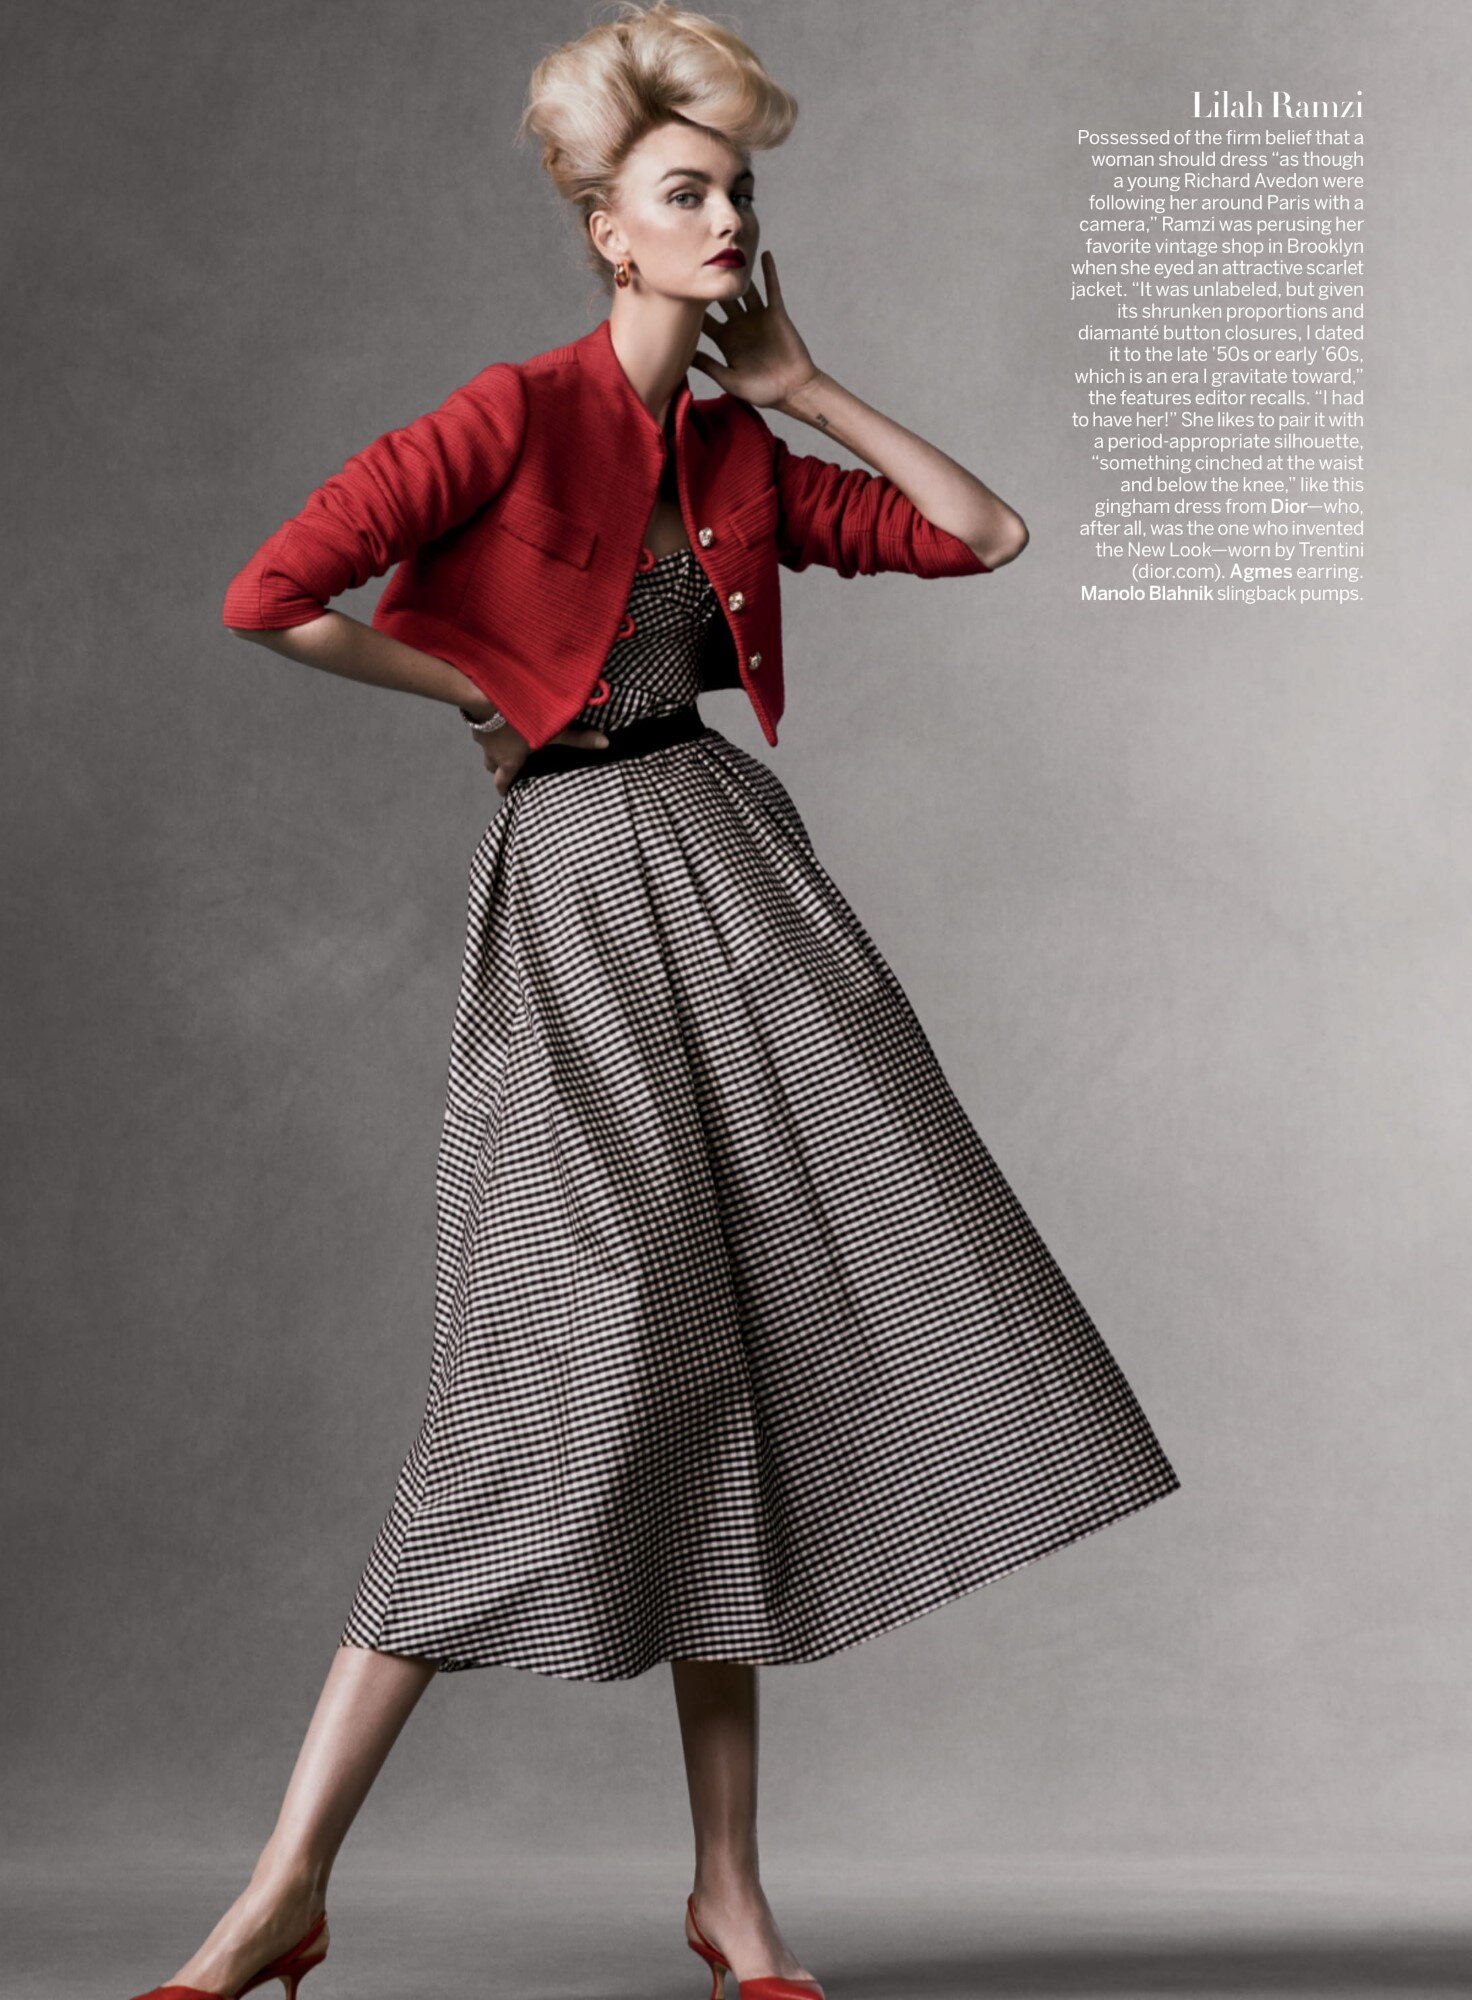 Caroline Trentino, Imaan Hammam by Ethan James Green Vogue May 2020 (7).jpg